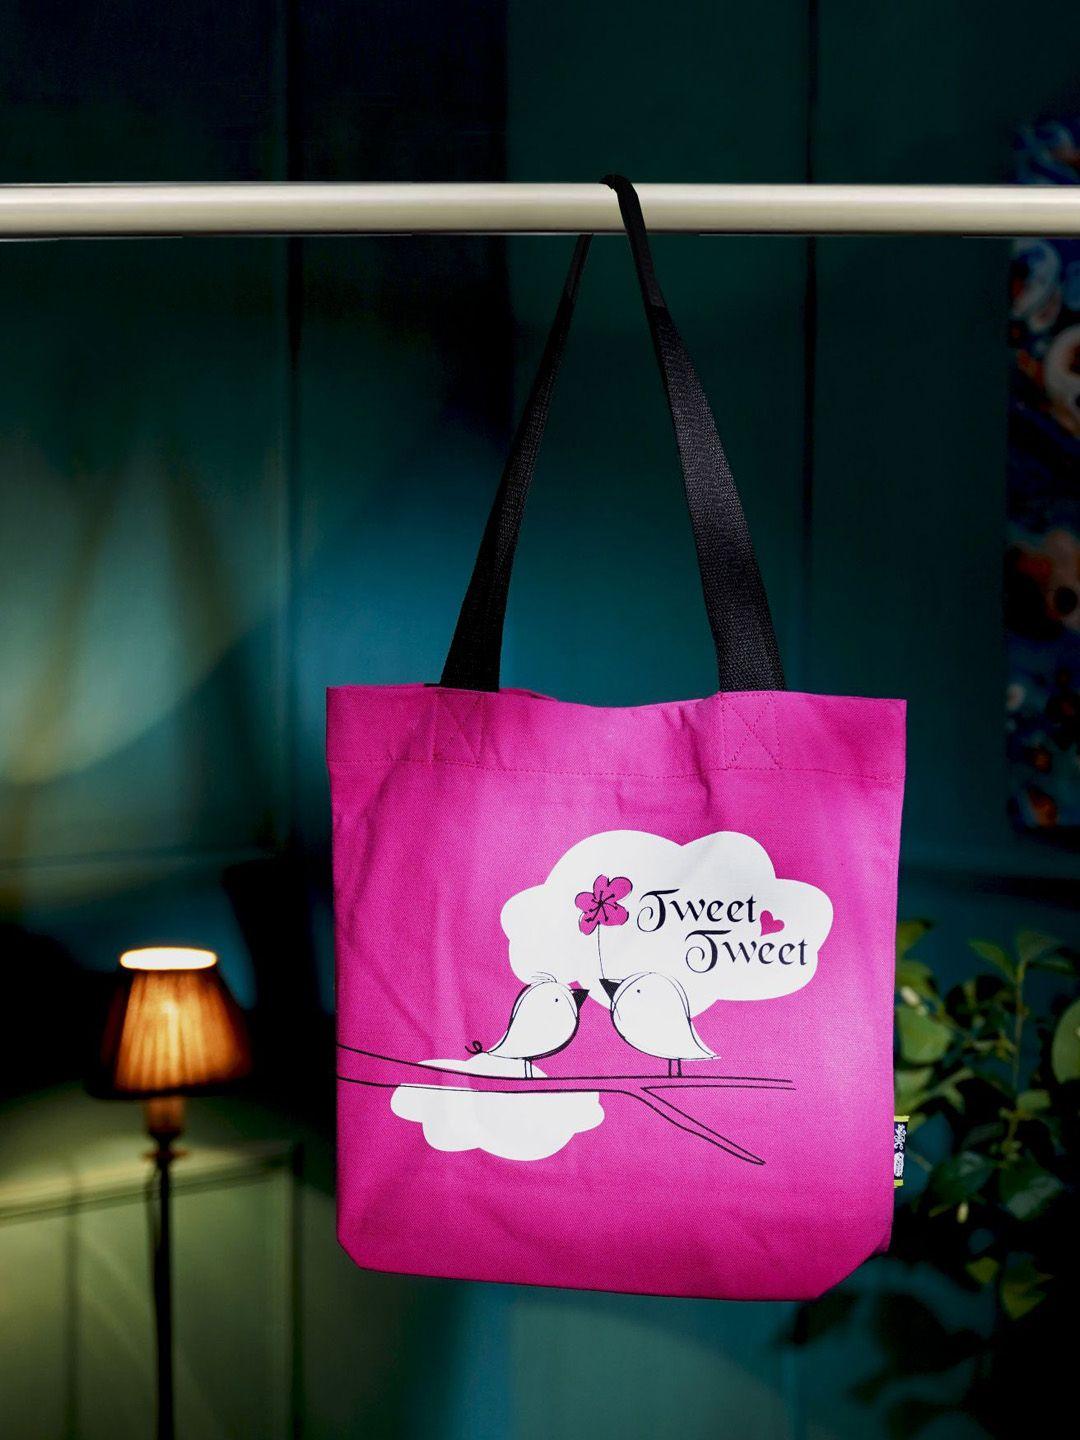 kanvas katha pink shopper tote bag with tasselled